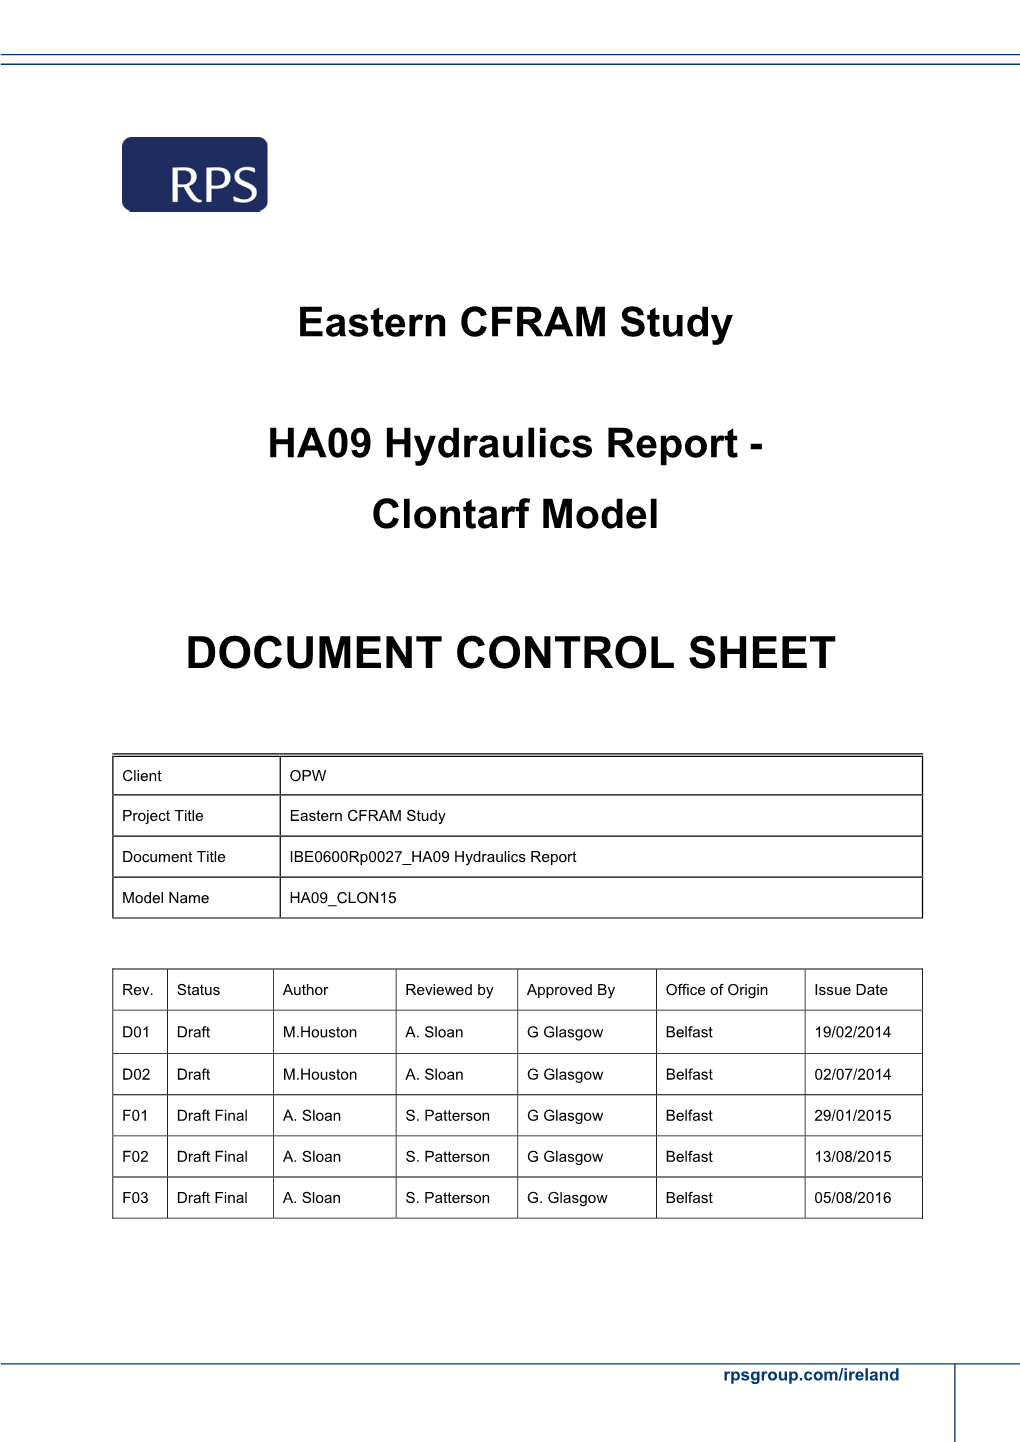 Eastern CFRAM Study HA09 Hydraulics Report (Clontarf) – DRAFT FINAL